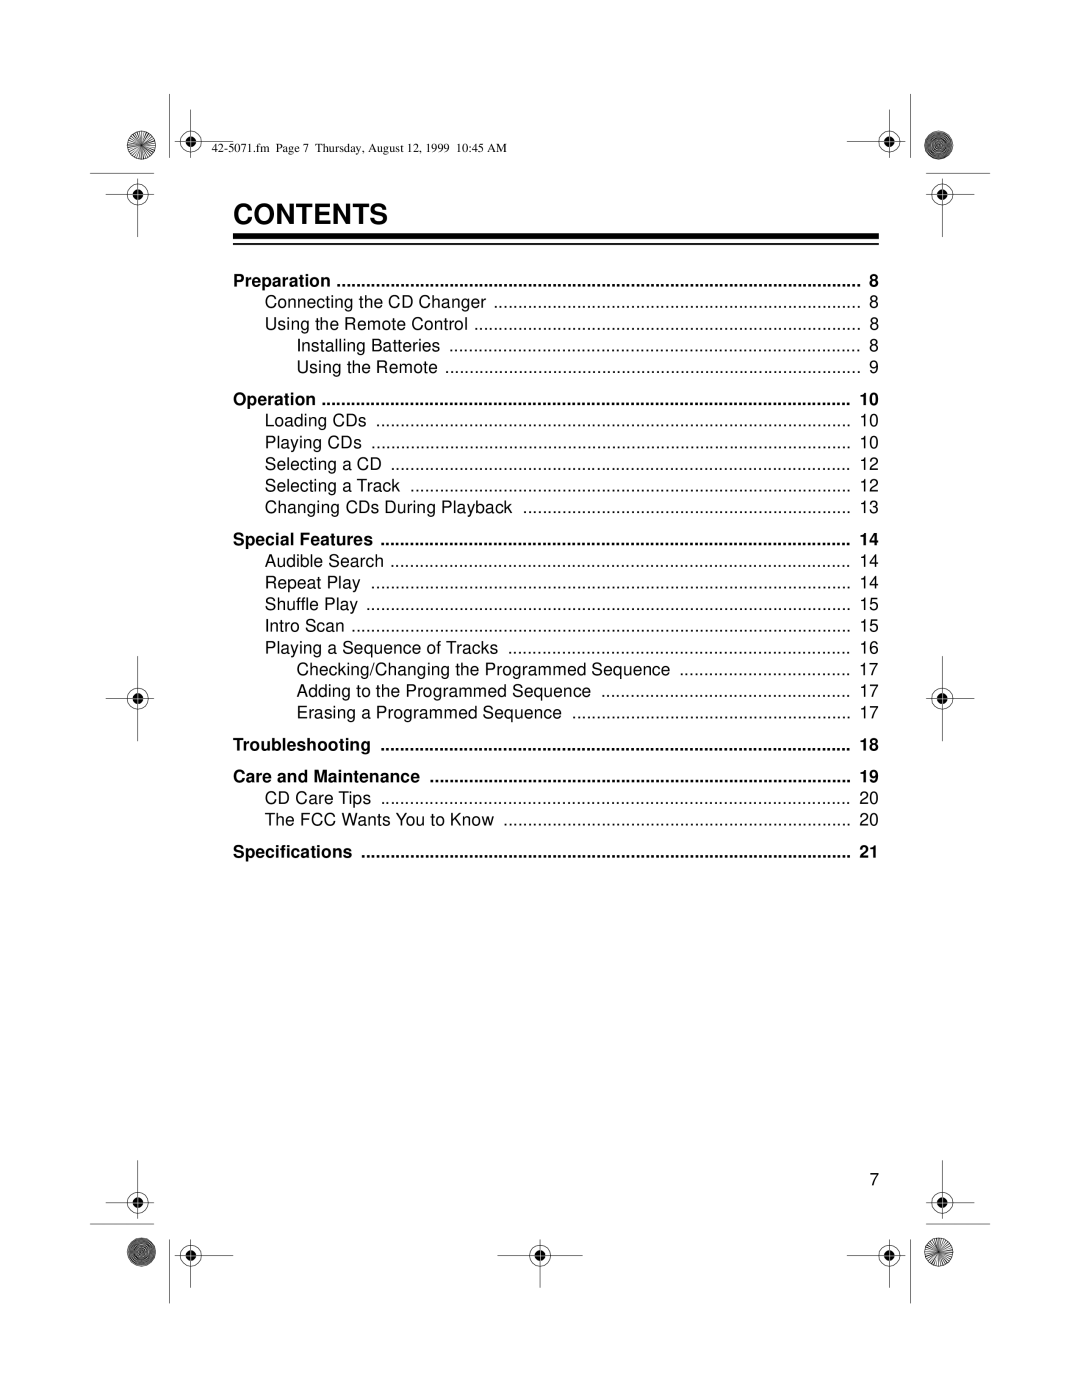 Radio Shack CD-8150 owner manual Contents 